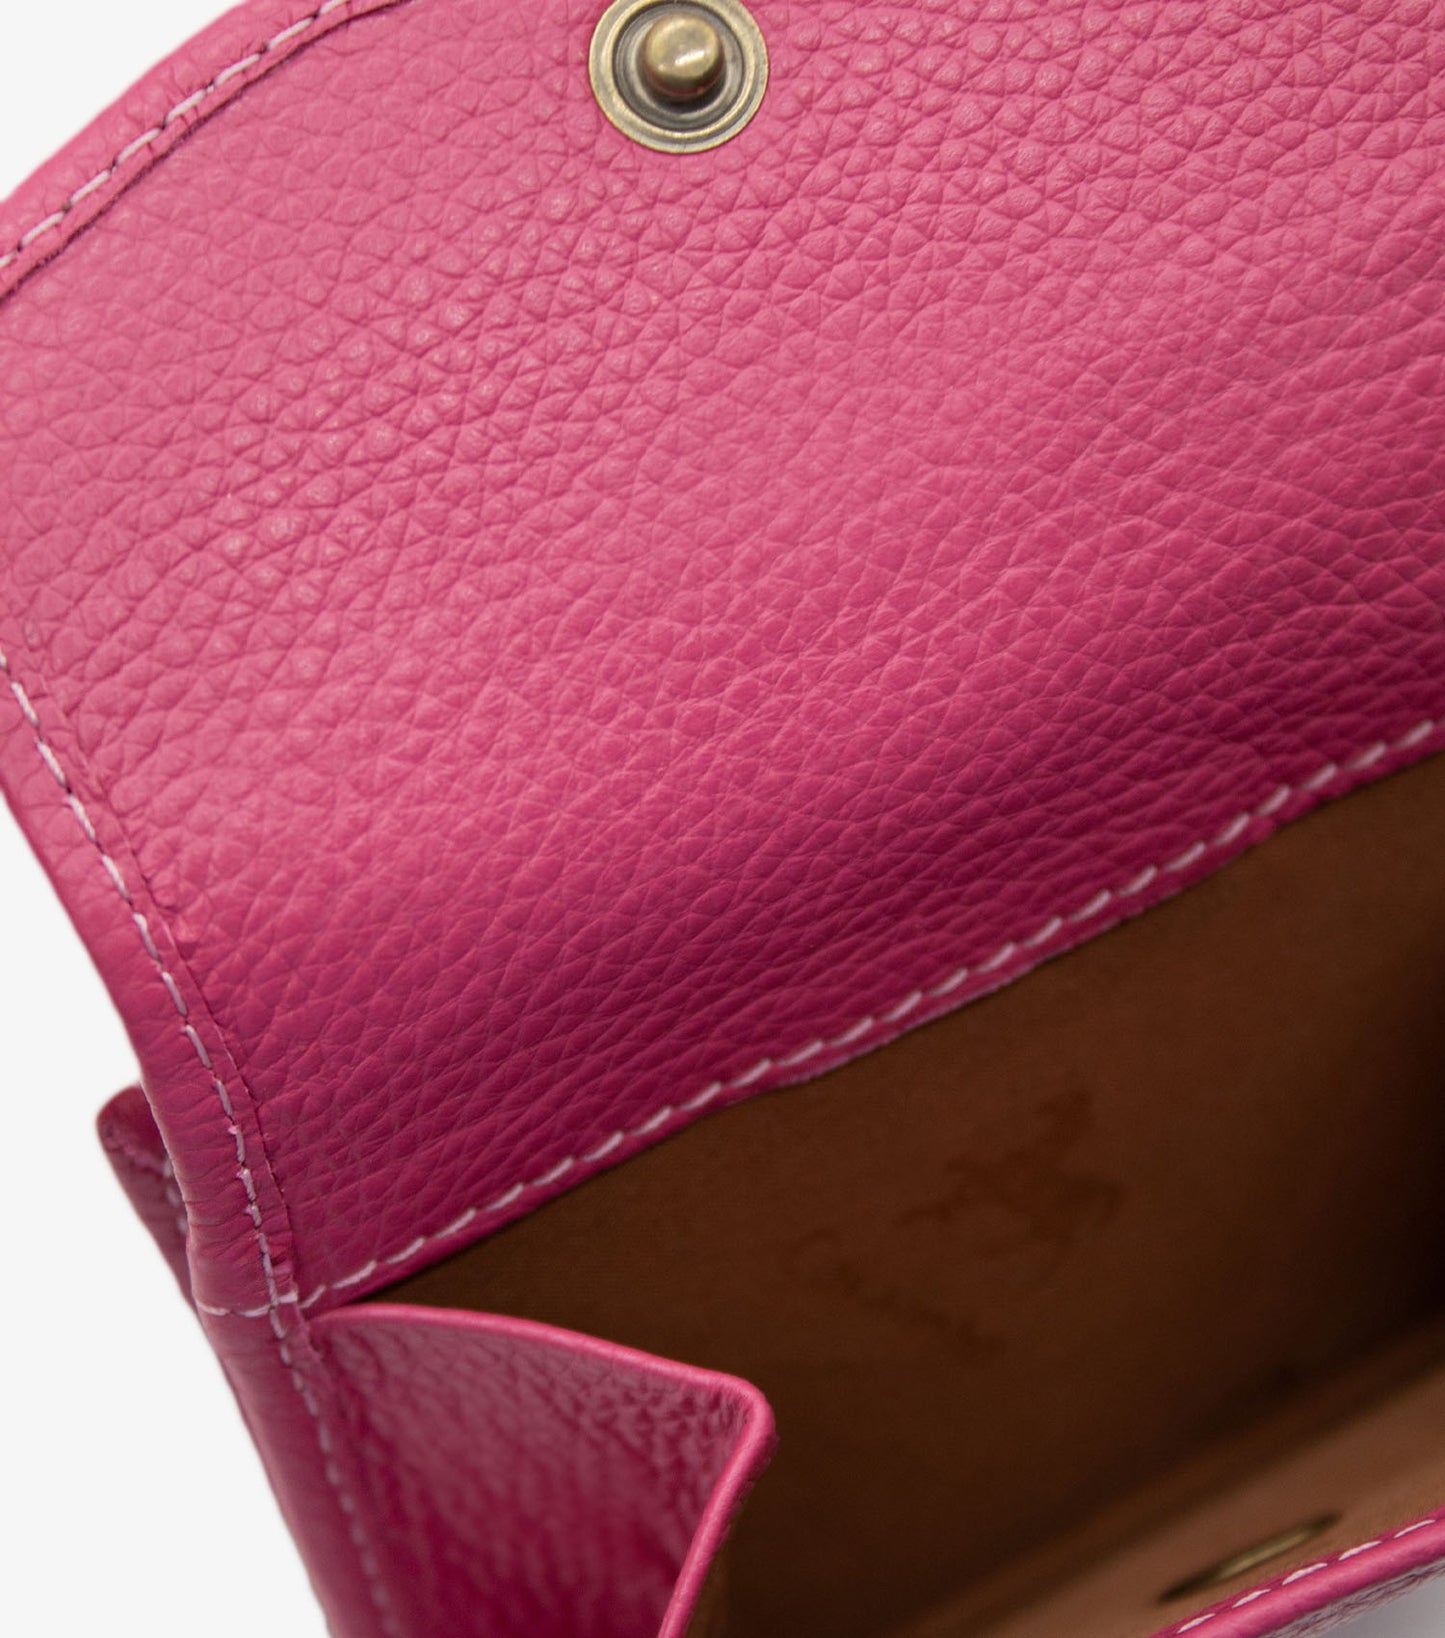 Cavalinho Muse Leather Mini Wallet - HotPink - 28300530.18_P04